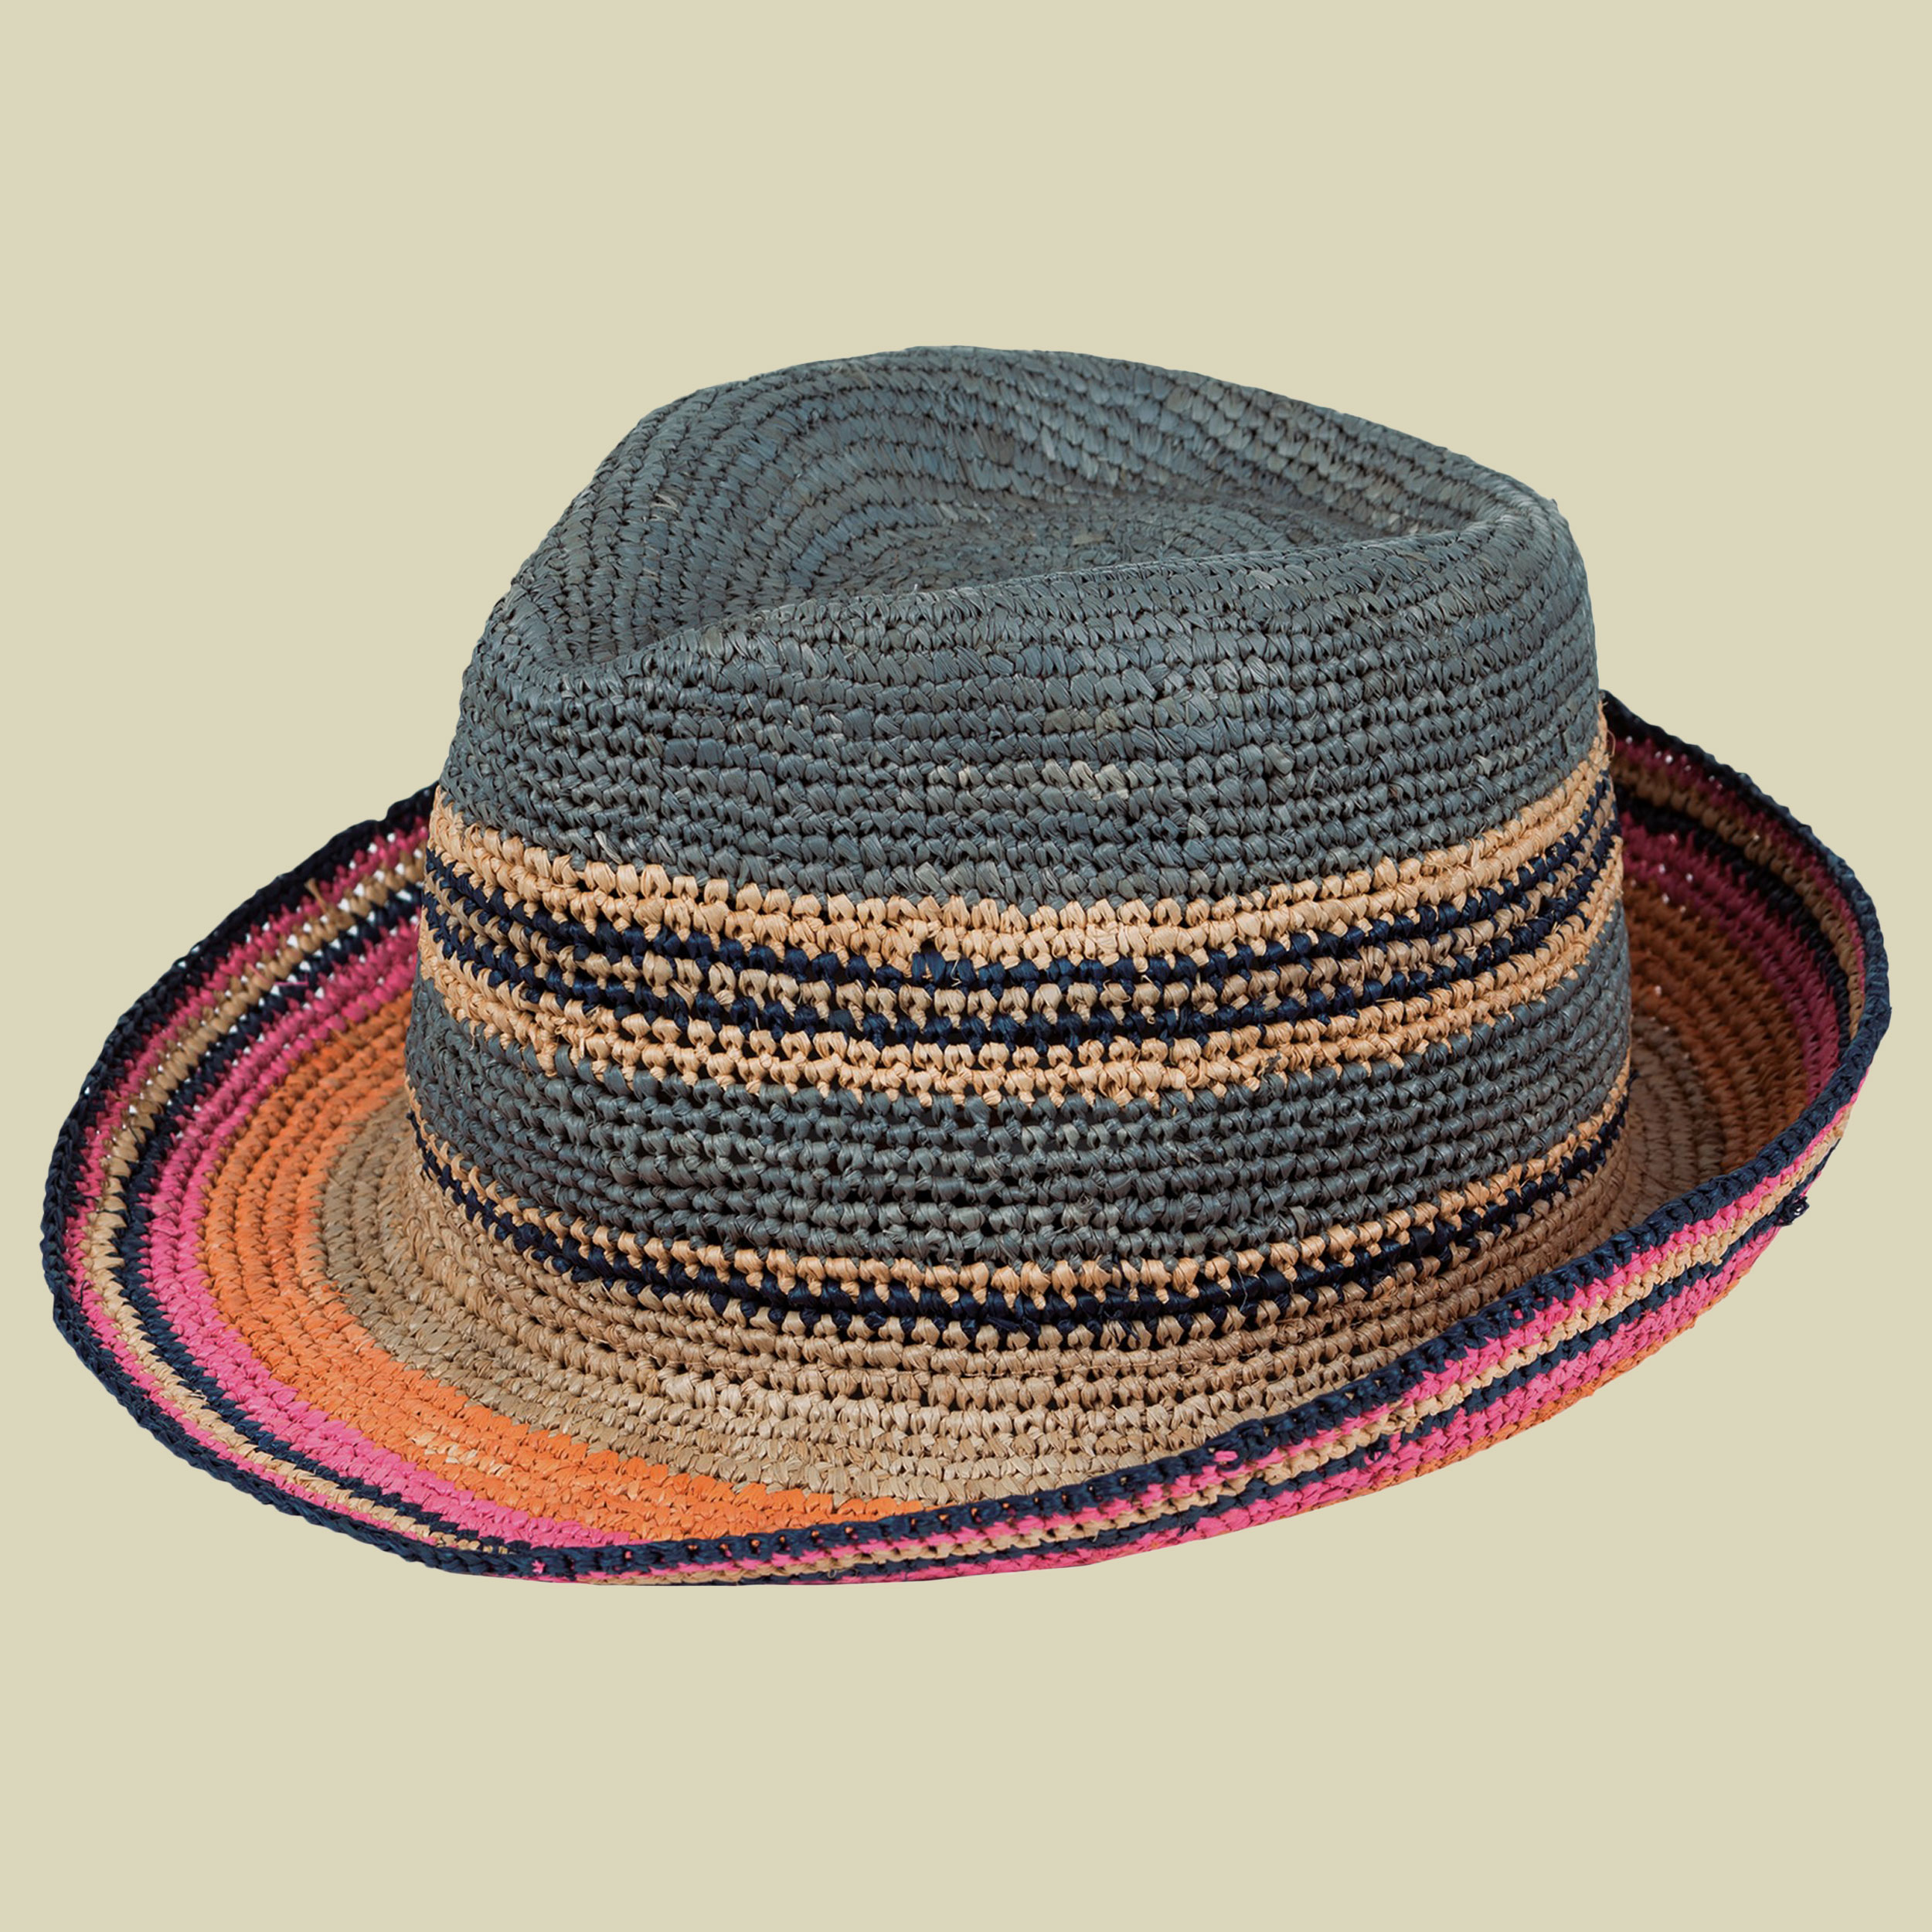 Havanna/Trilby Hat Größe S-M Farbe colorful mix